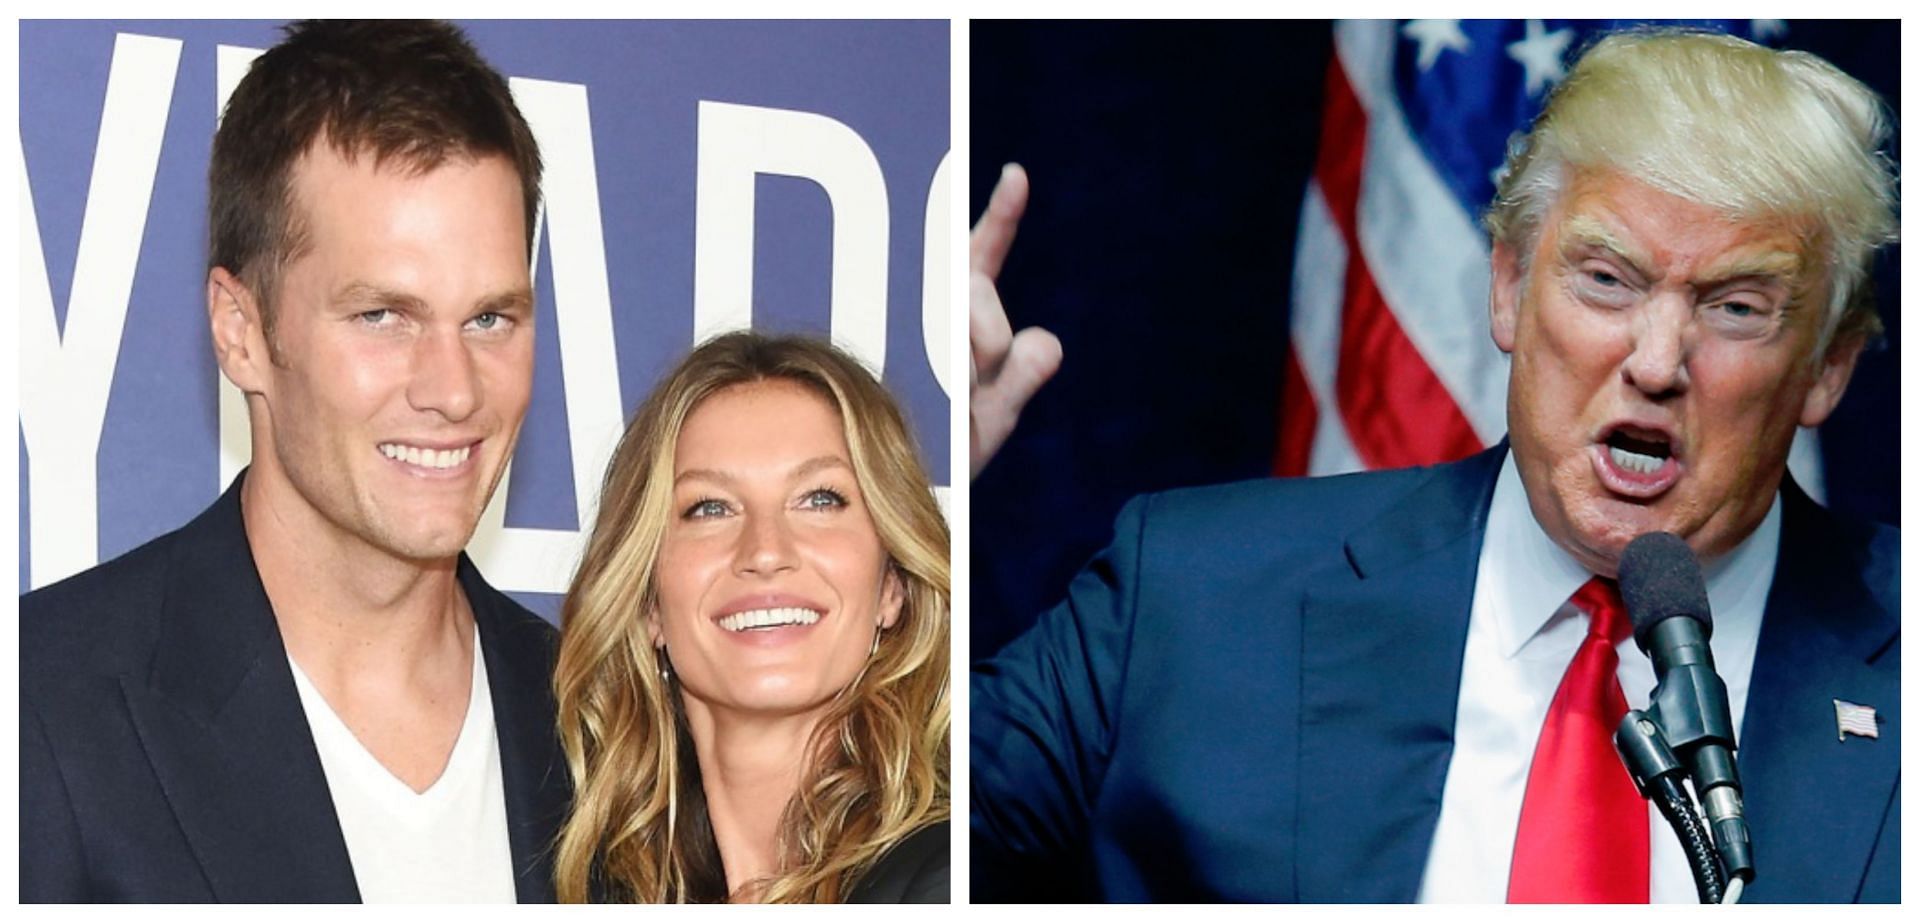 Tom Brady and Gisele Bundchen | Donald Trump